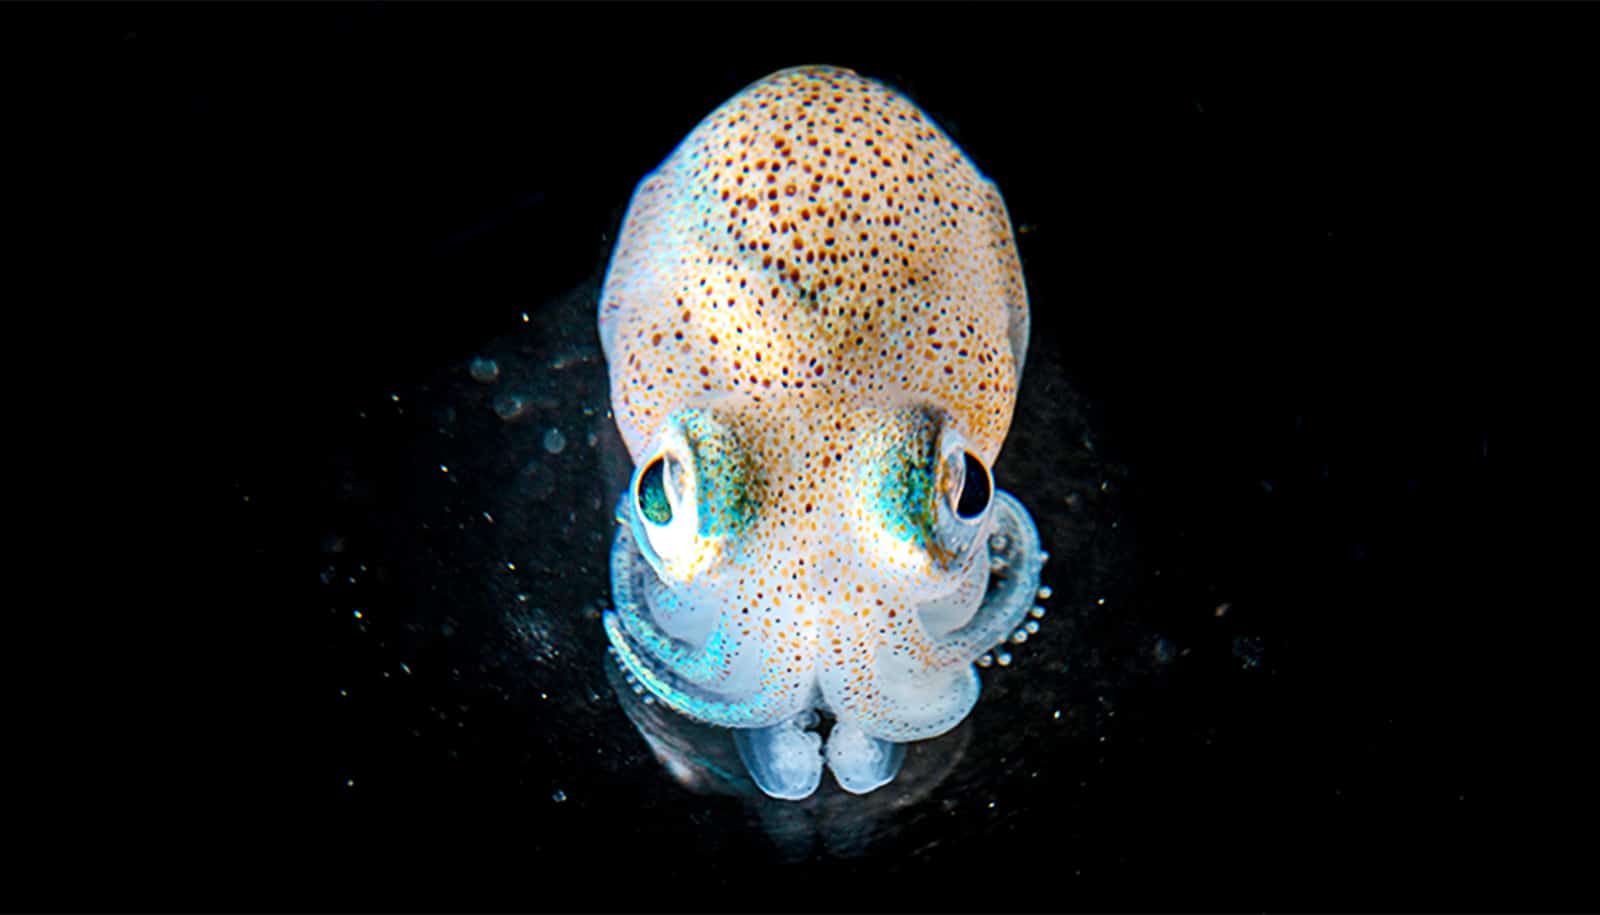 vampire squid glowing in the dark